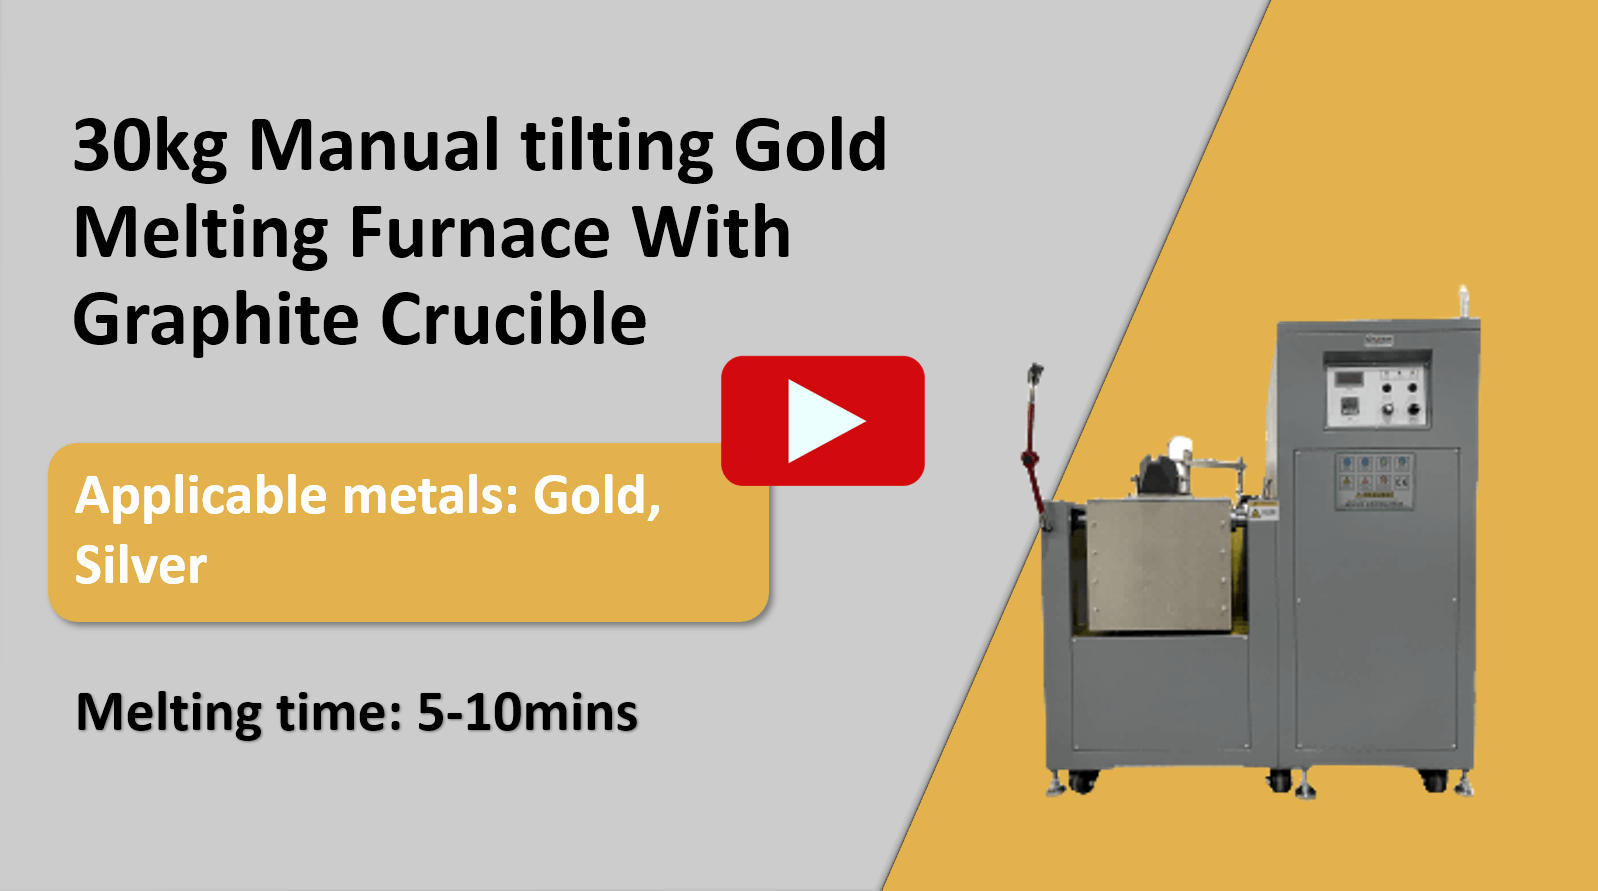 30kg Manual tilting Gold Melting Furnace With Graphite Crucible